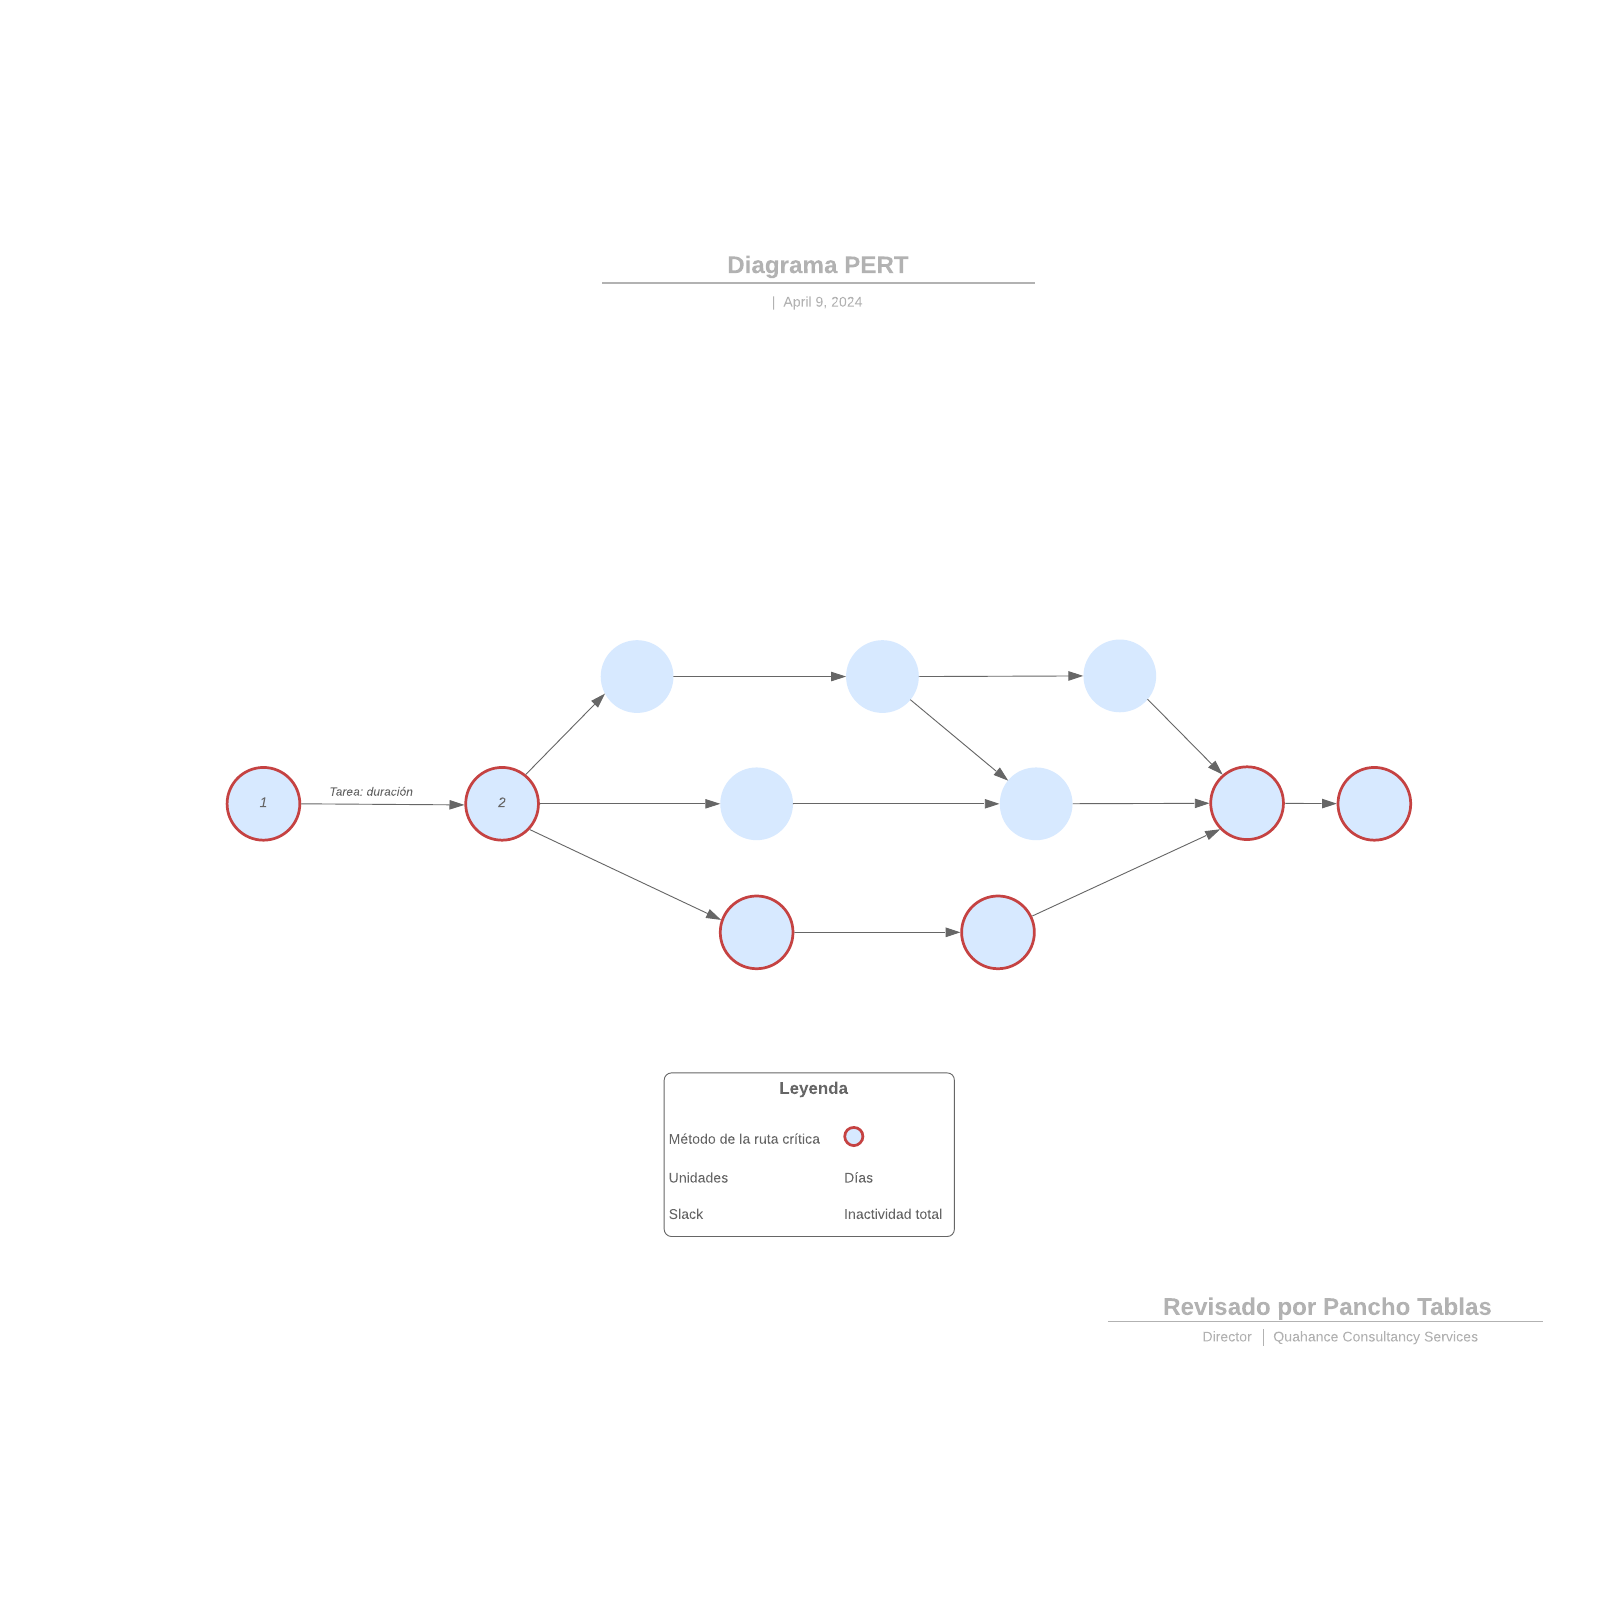 Diagrama PERT example